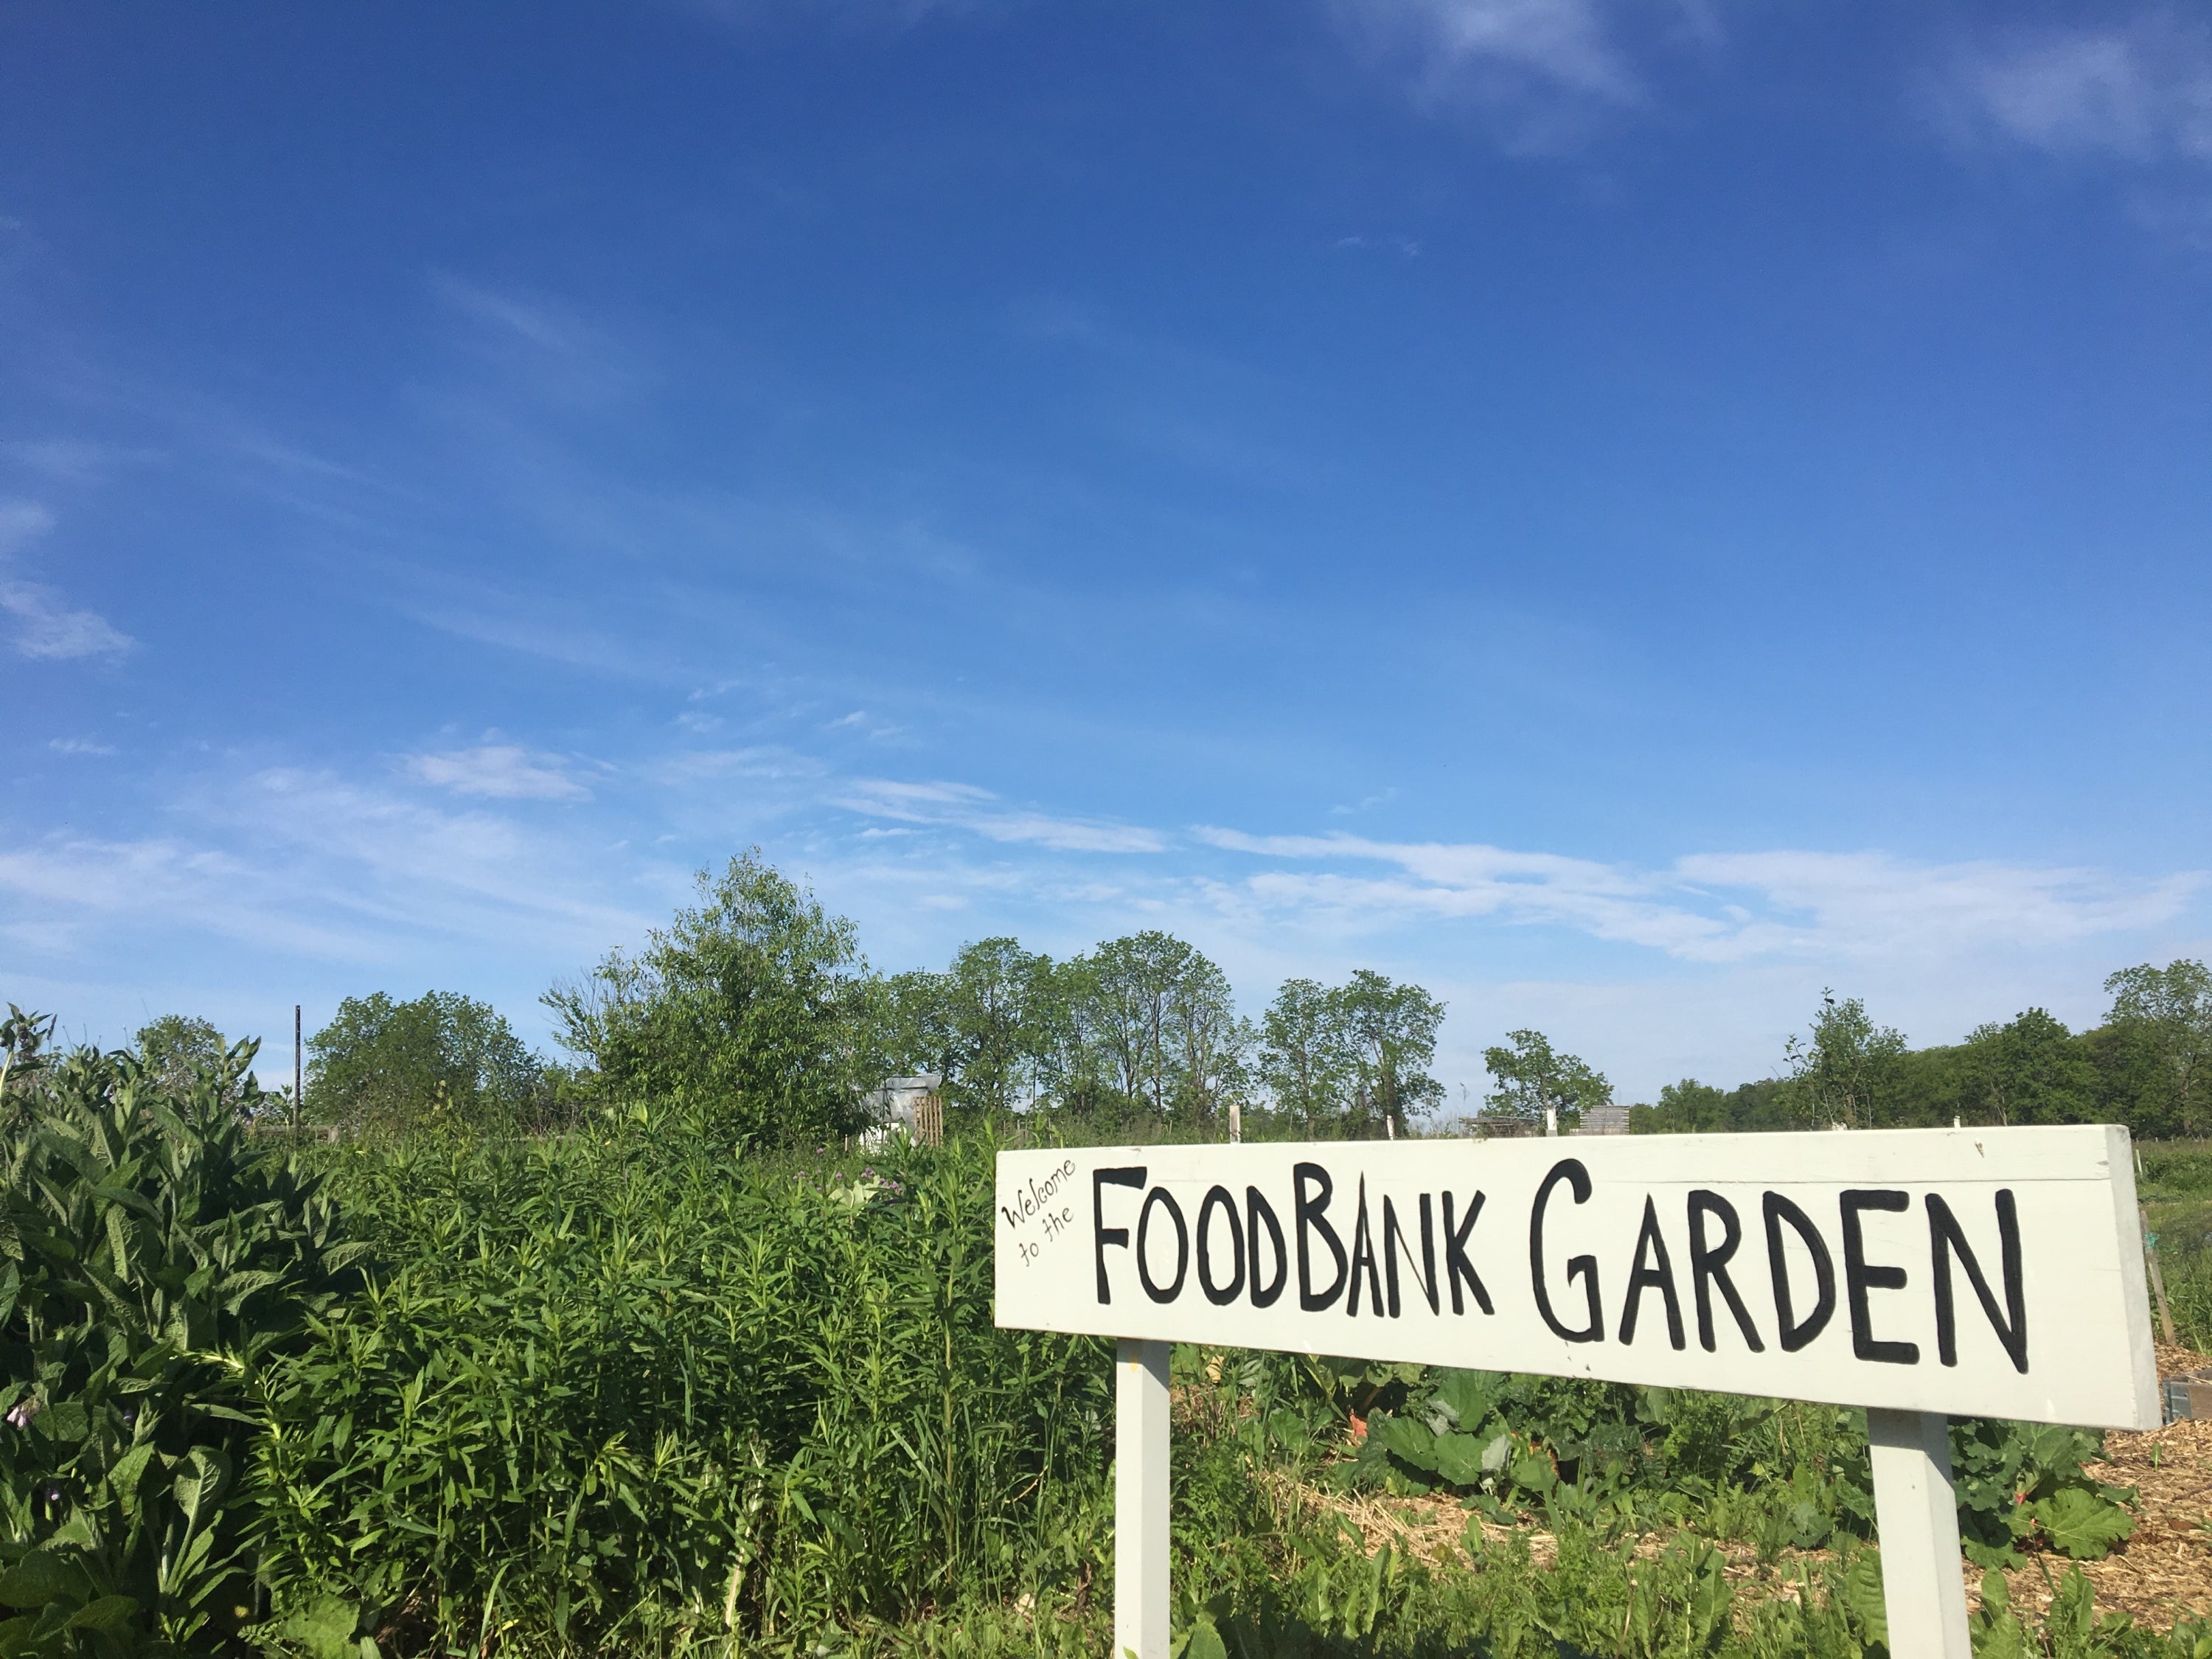 Foodbank garden sign